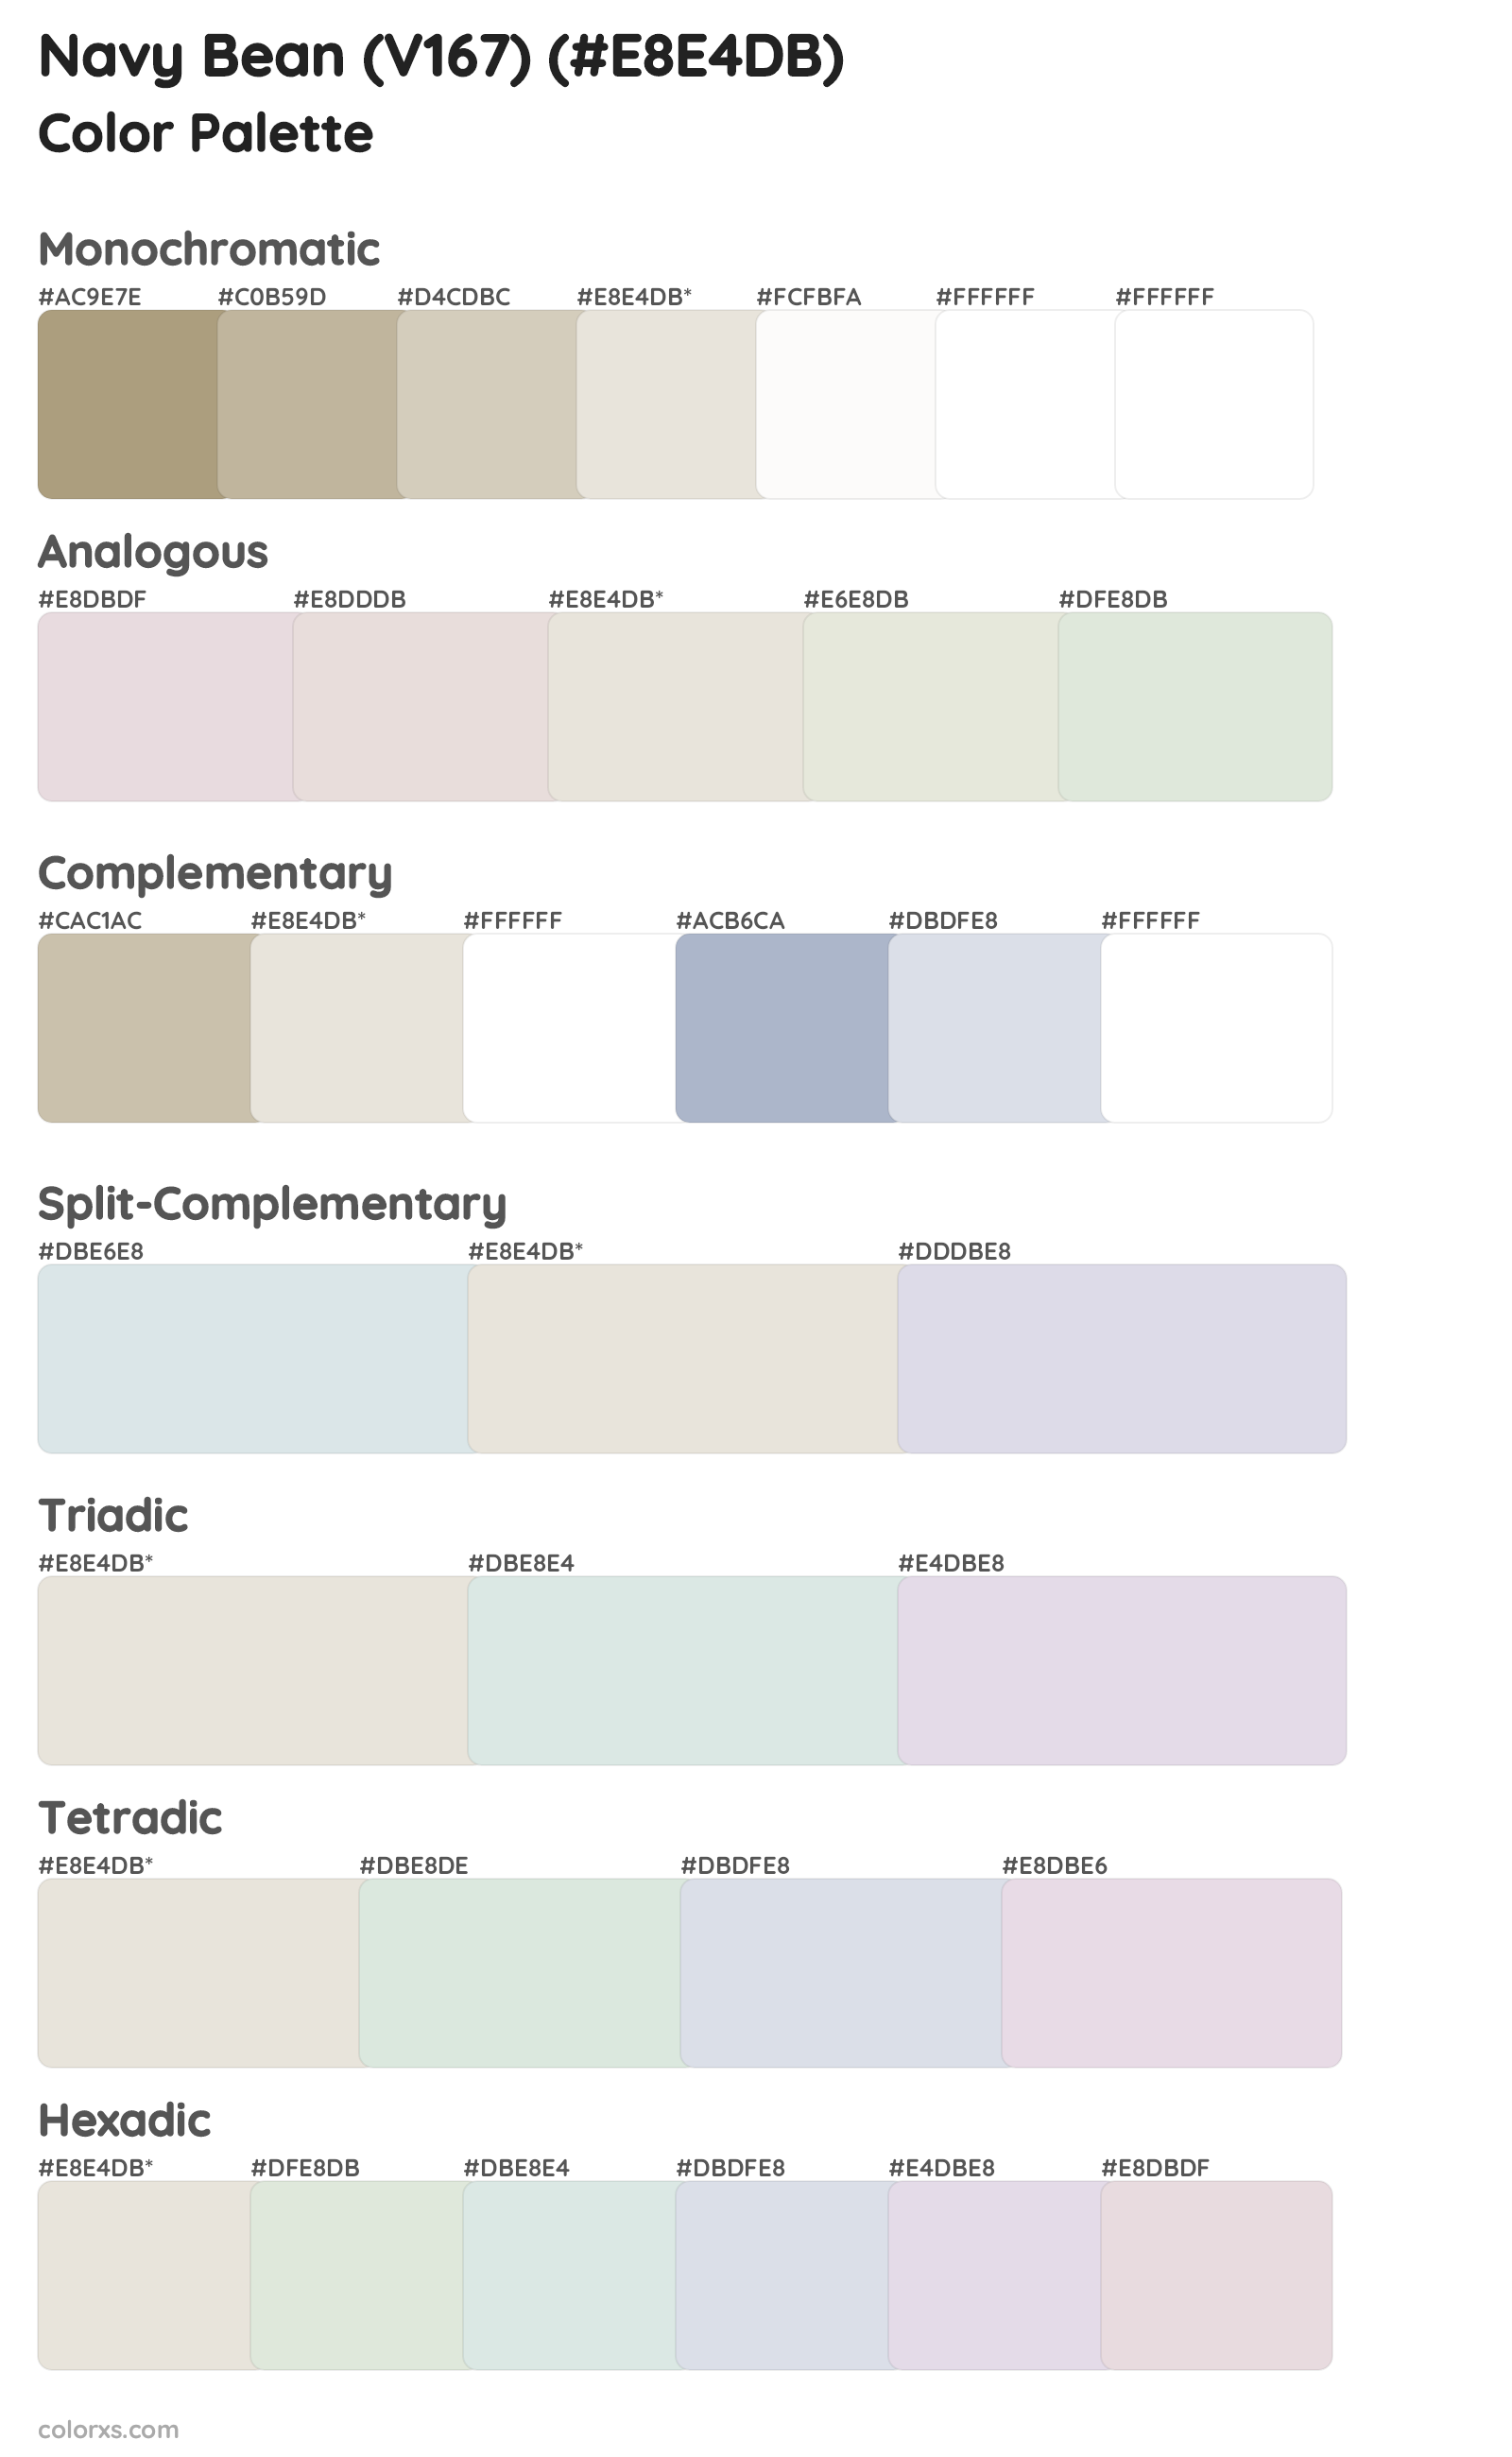 Navy Bean (V167) Color Scheme Palettes